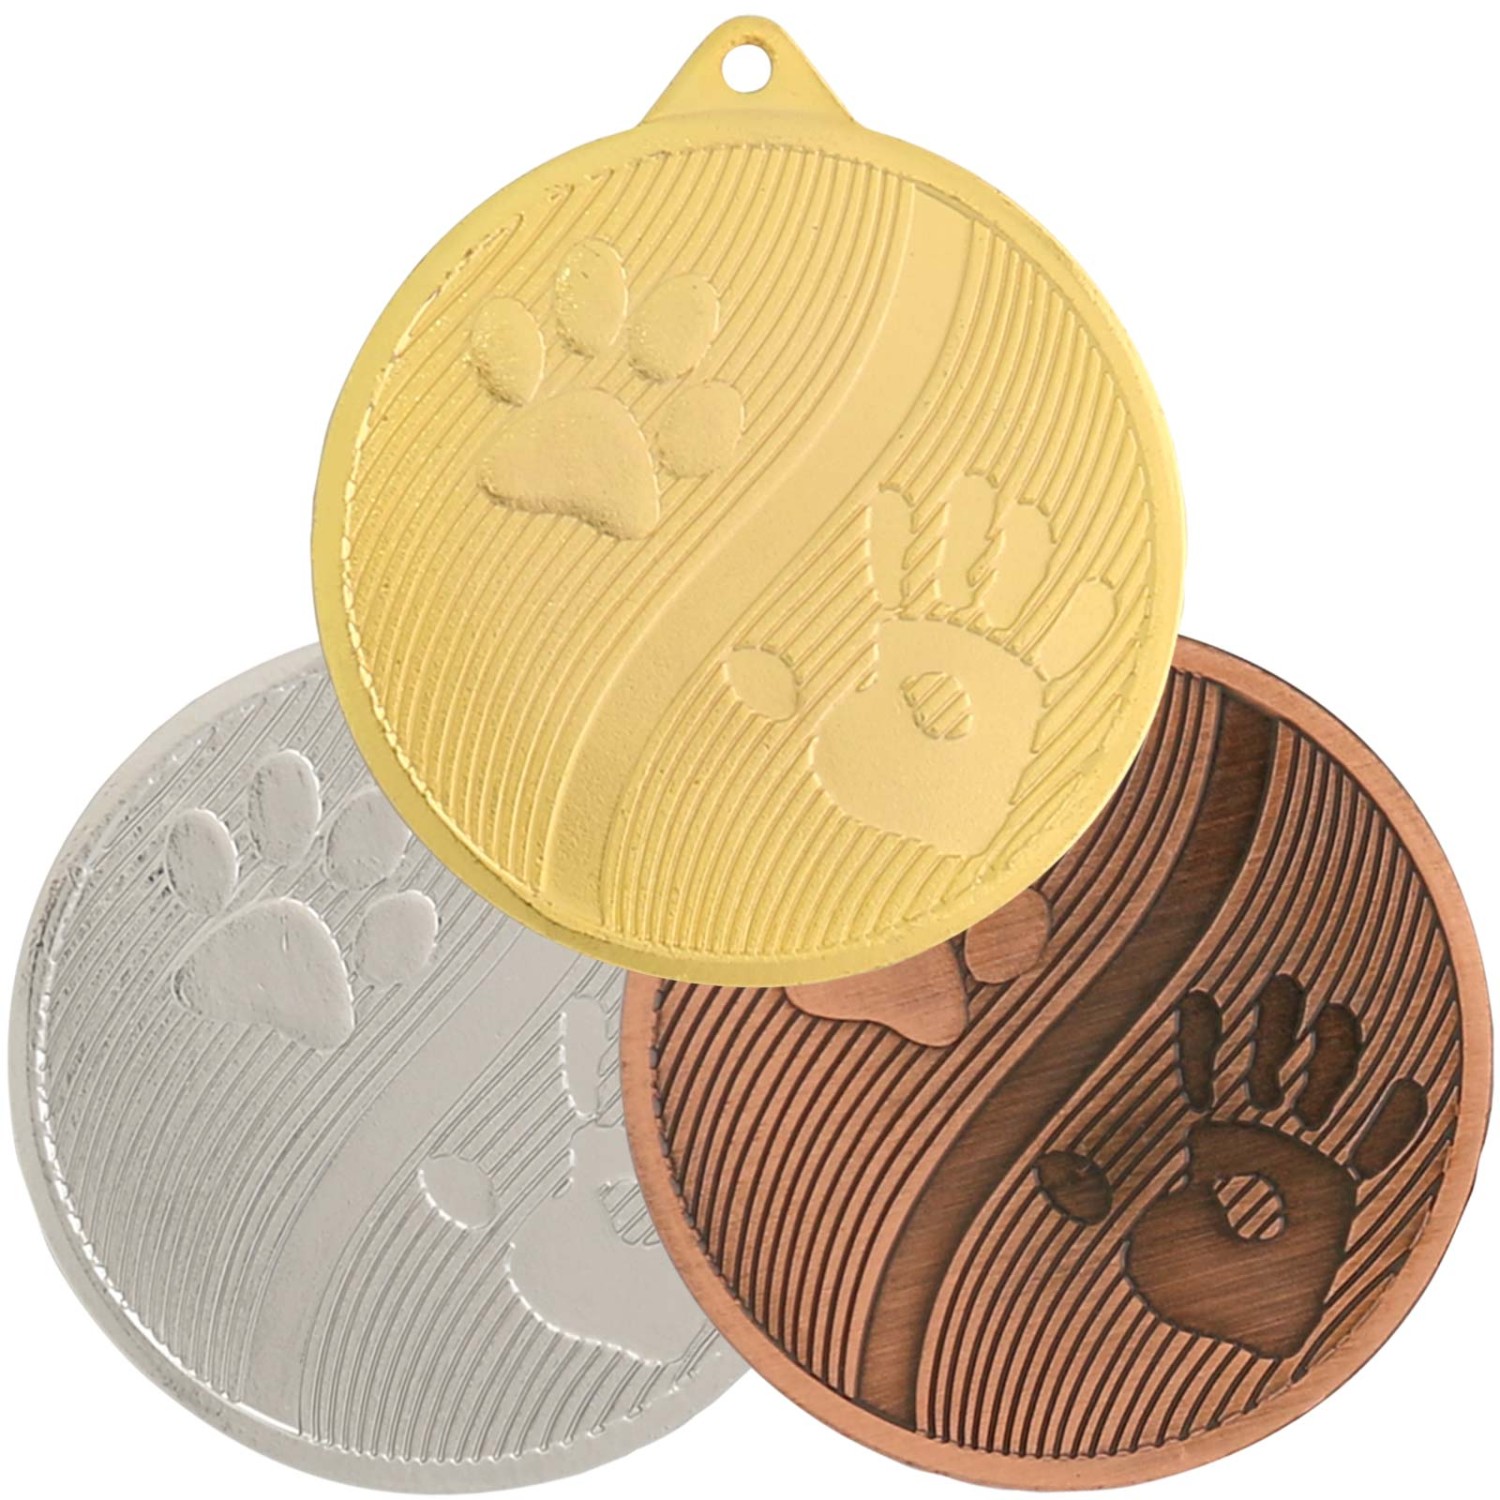 1. Foto Medaille Hunde Hundepfoten gold silber bronze 50 mm Stahl (Sorte: bronze)